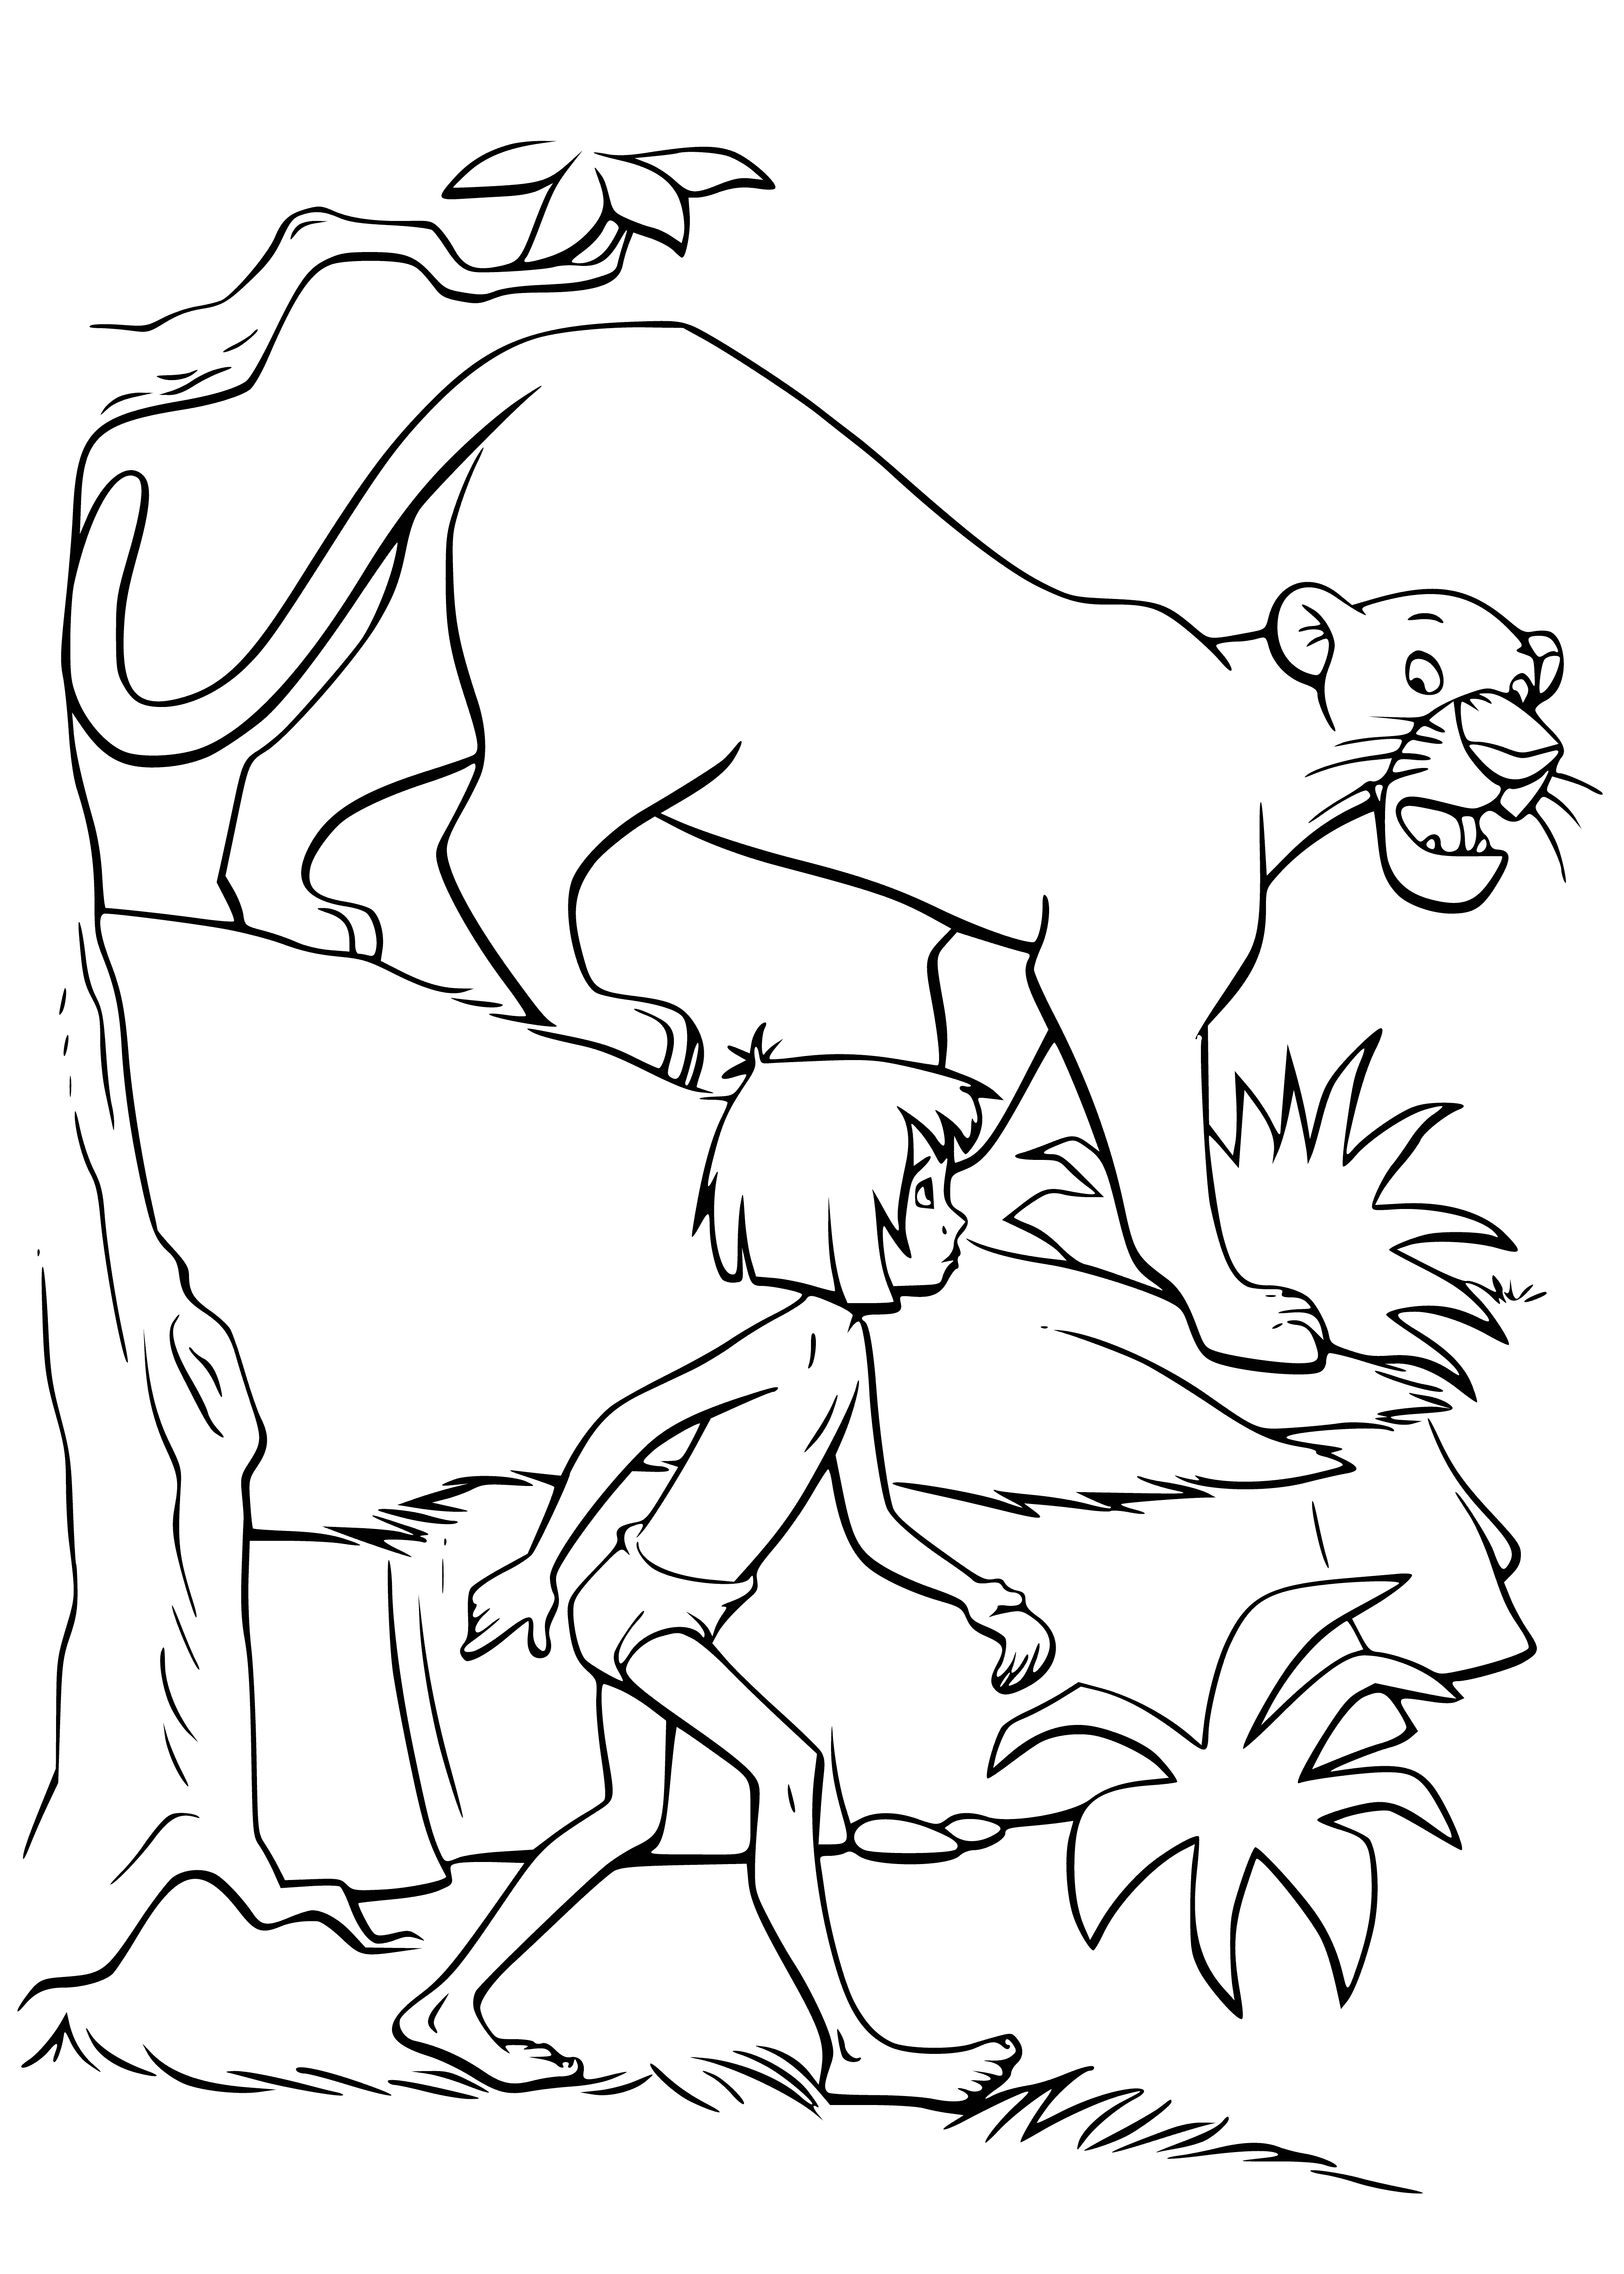 Bagira and Mowgli coloring page